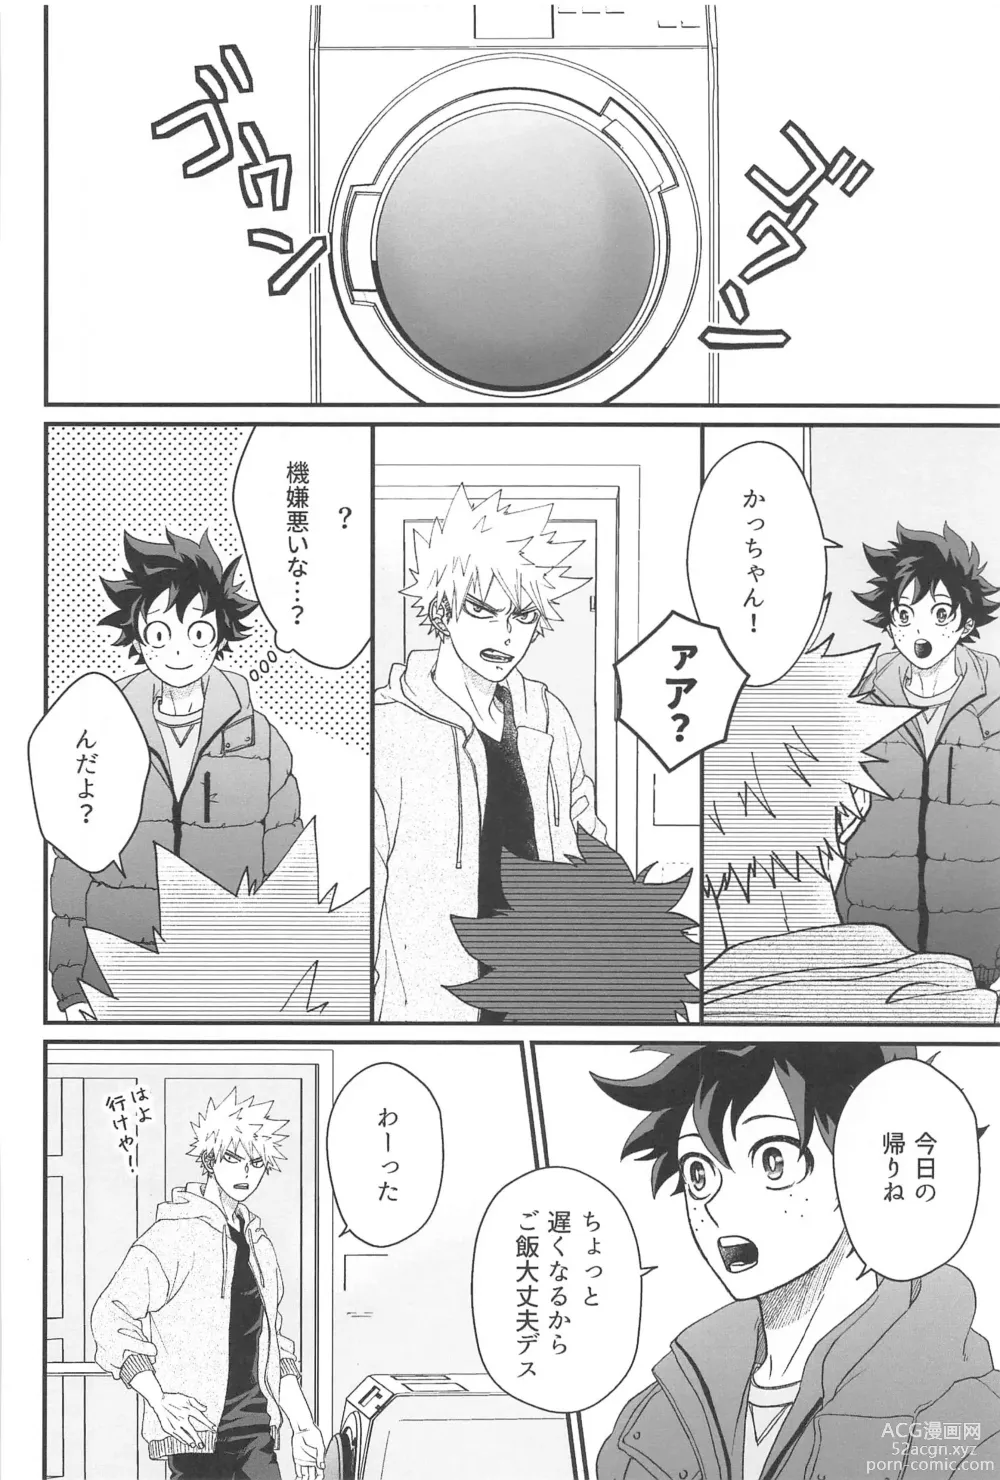 Page 5 of doujinshi 0.01